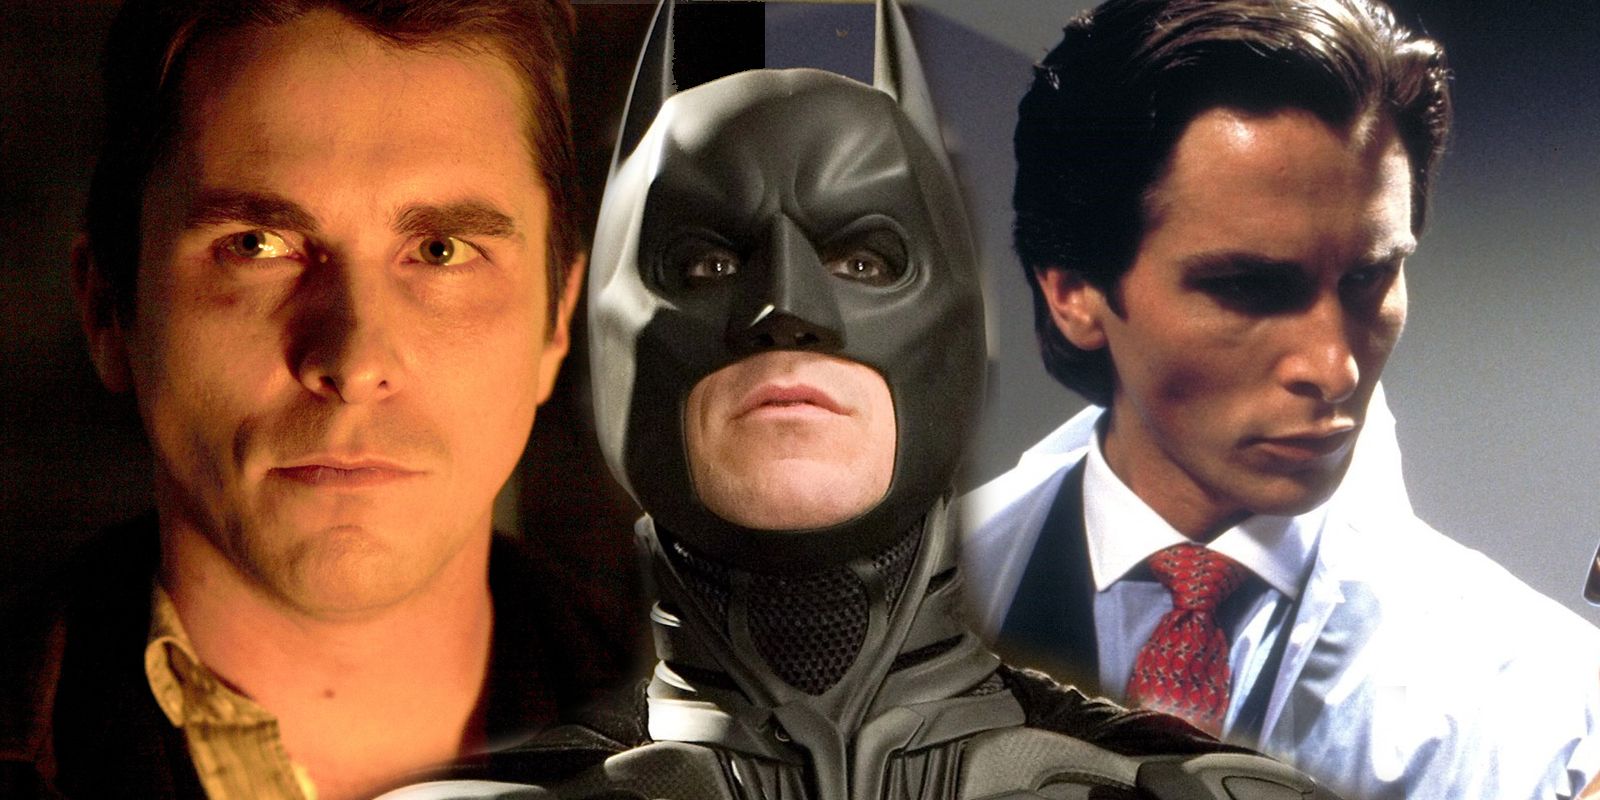 Christian Bale as Alfred Borden, Batman, and Patrick Bateman